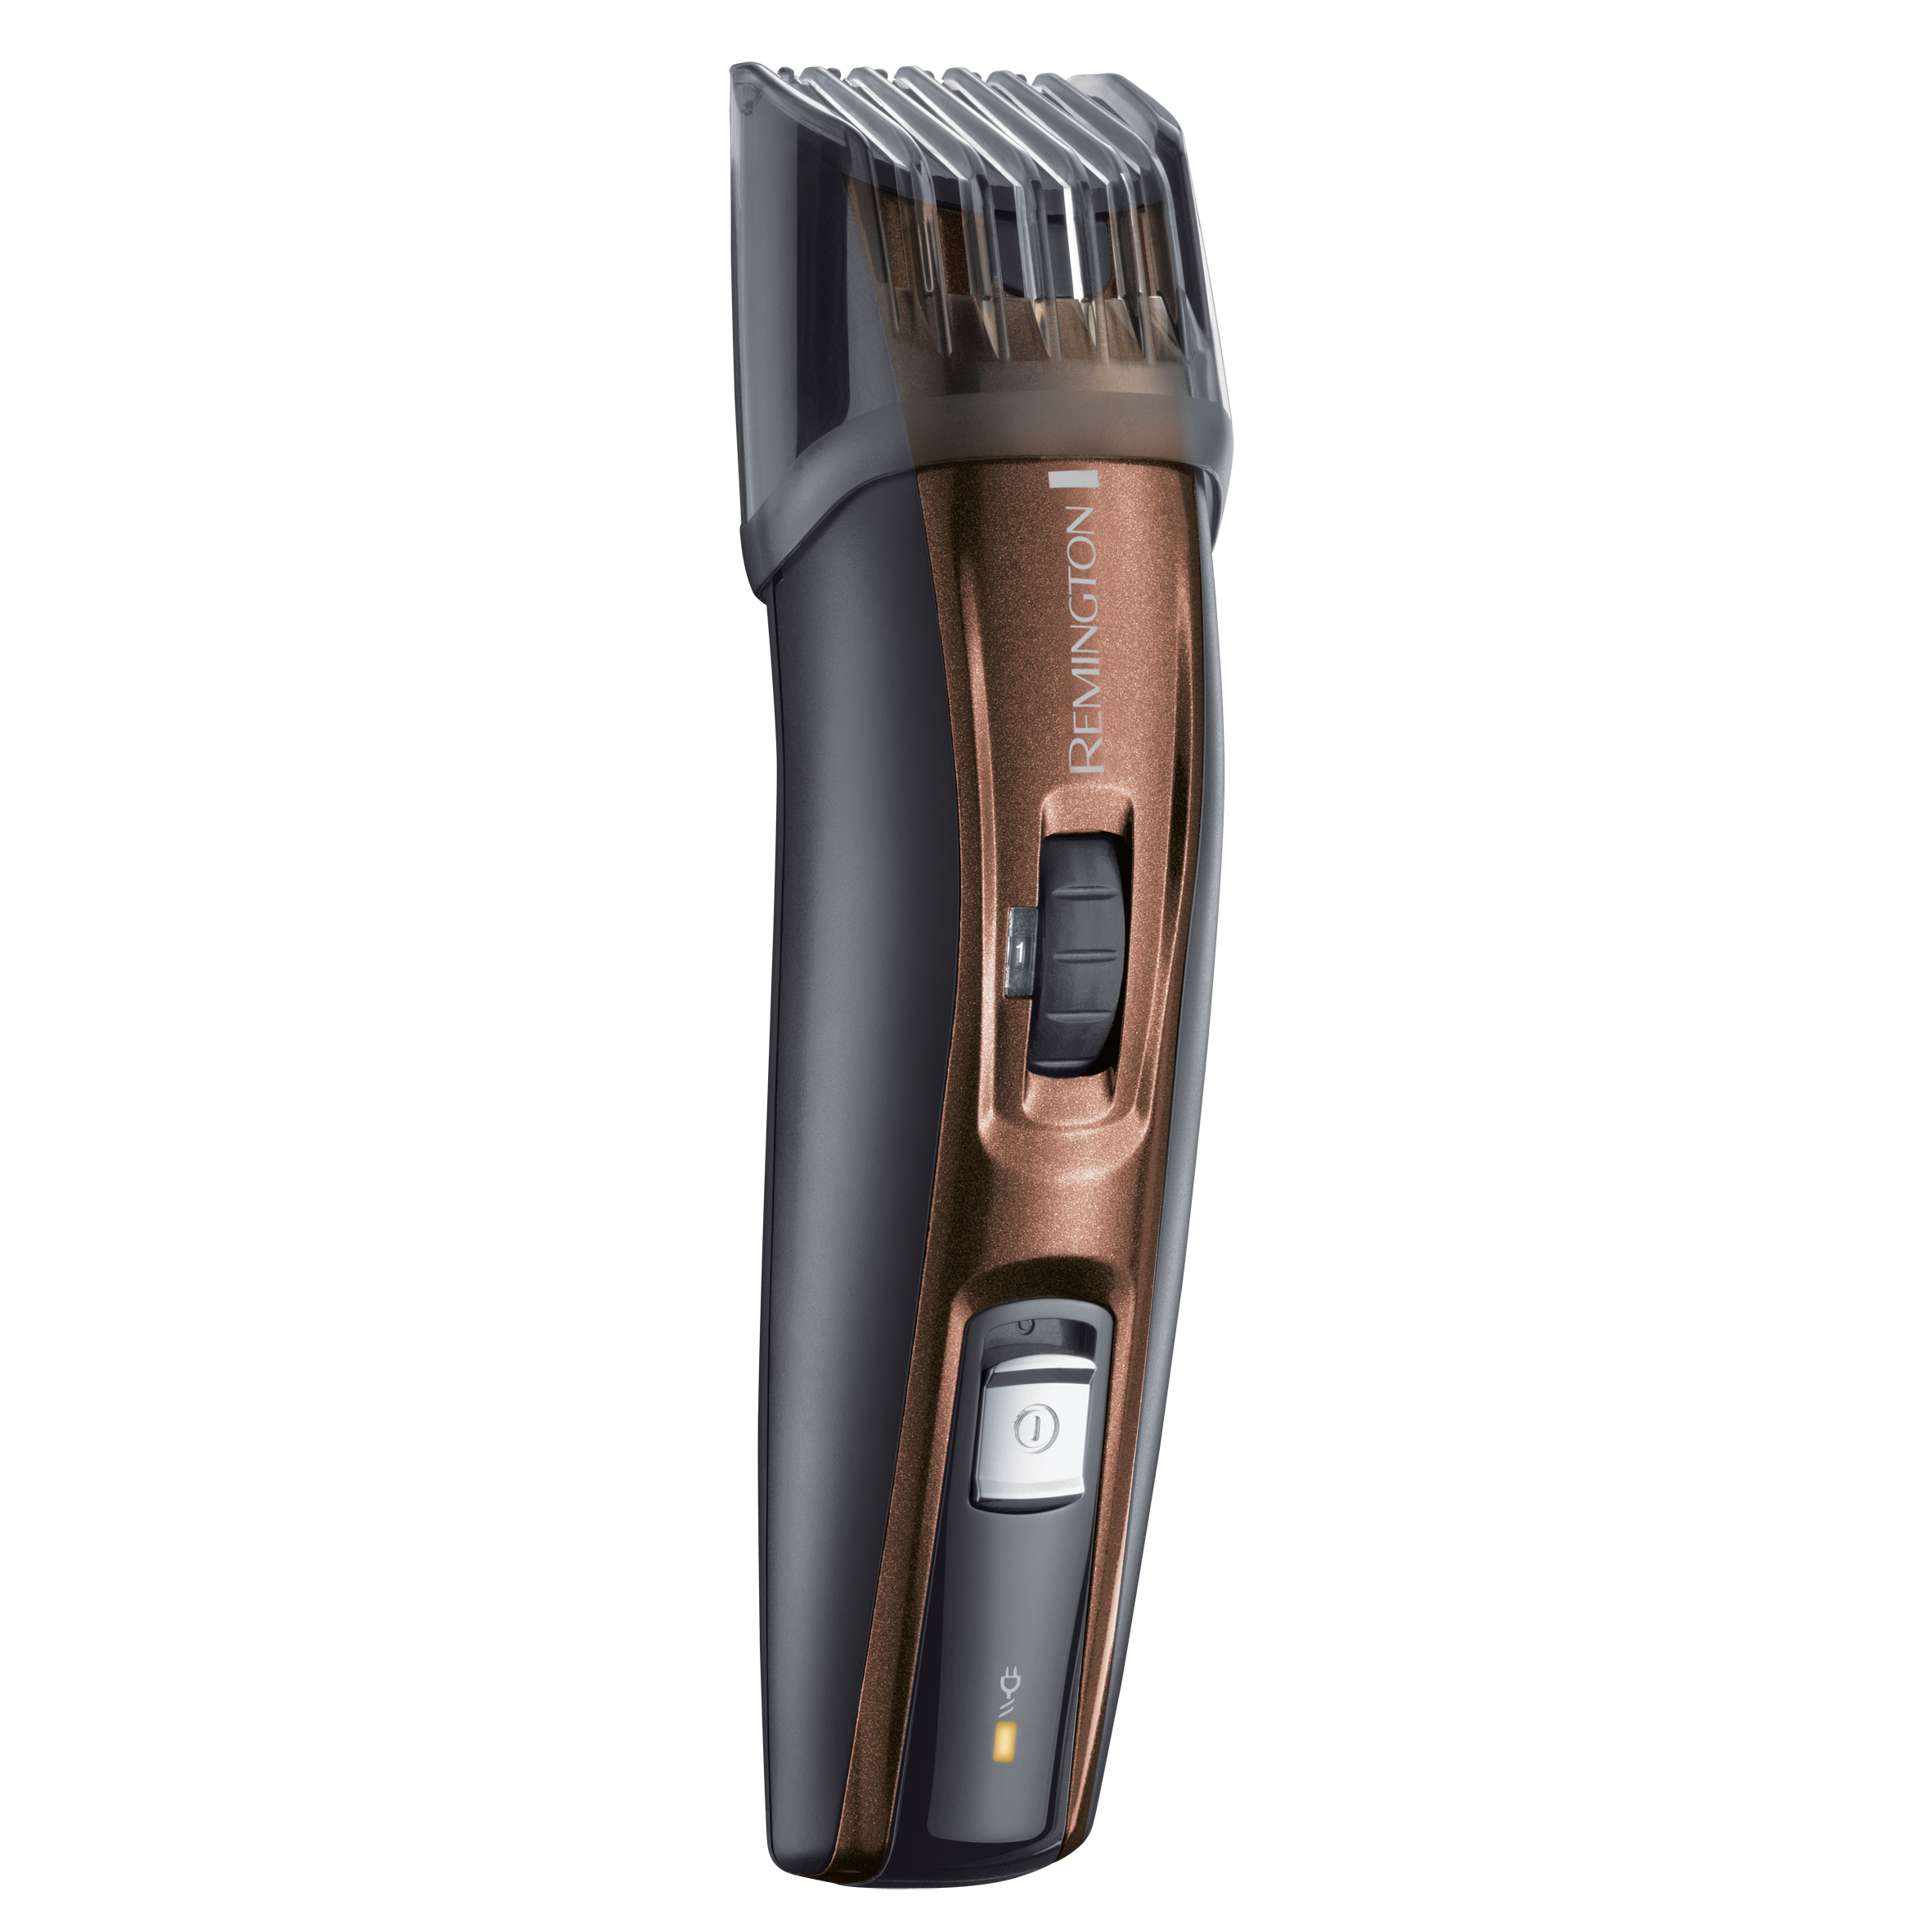 remington beard trimmer mb4045